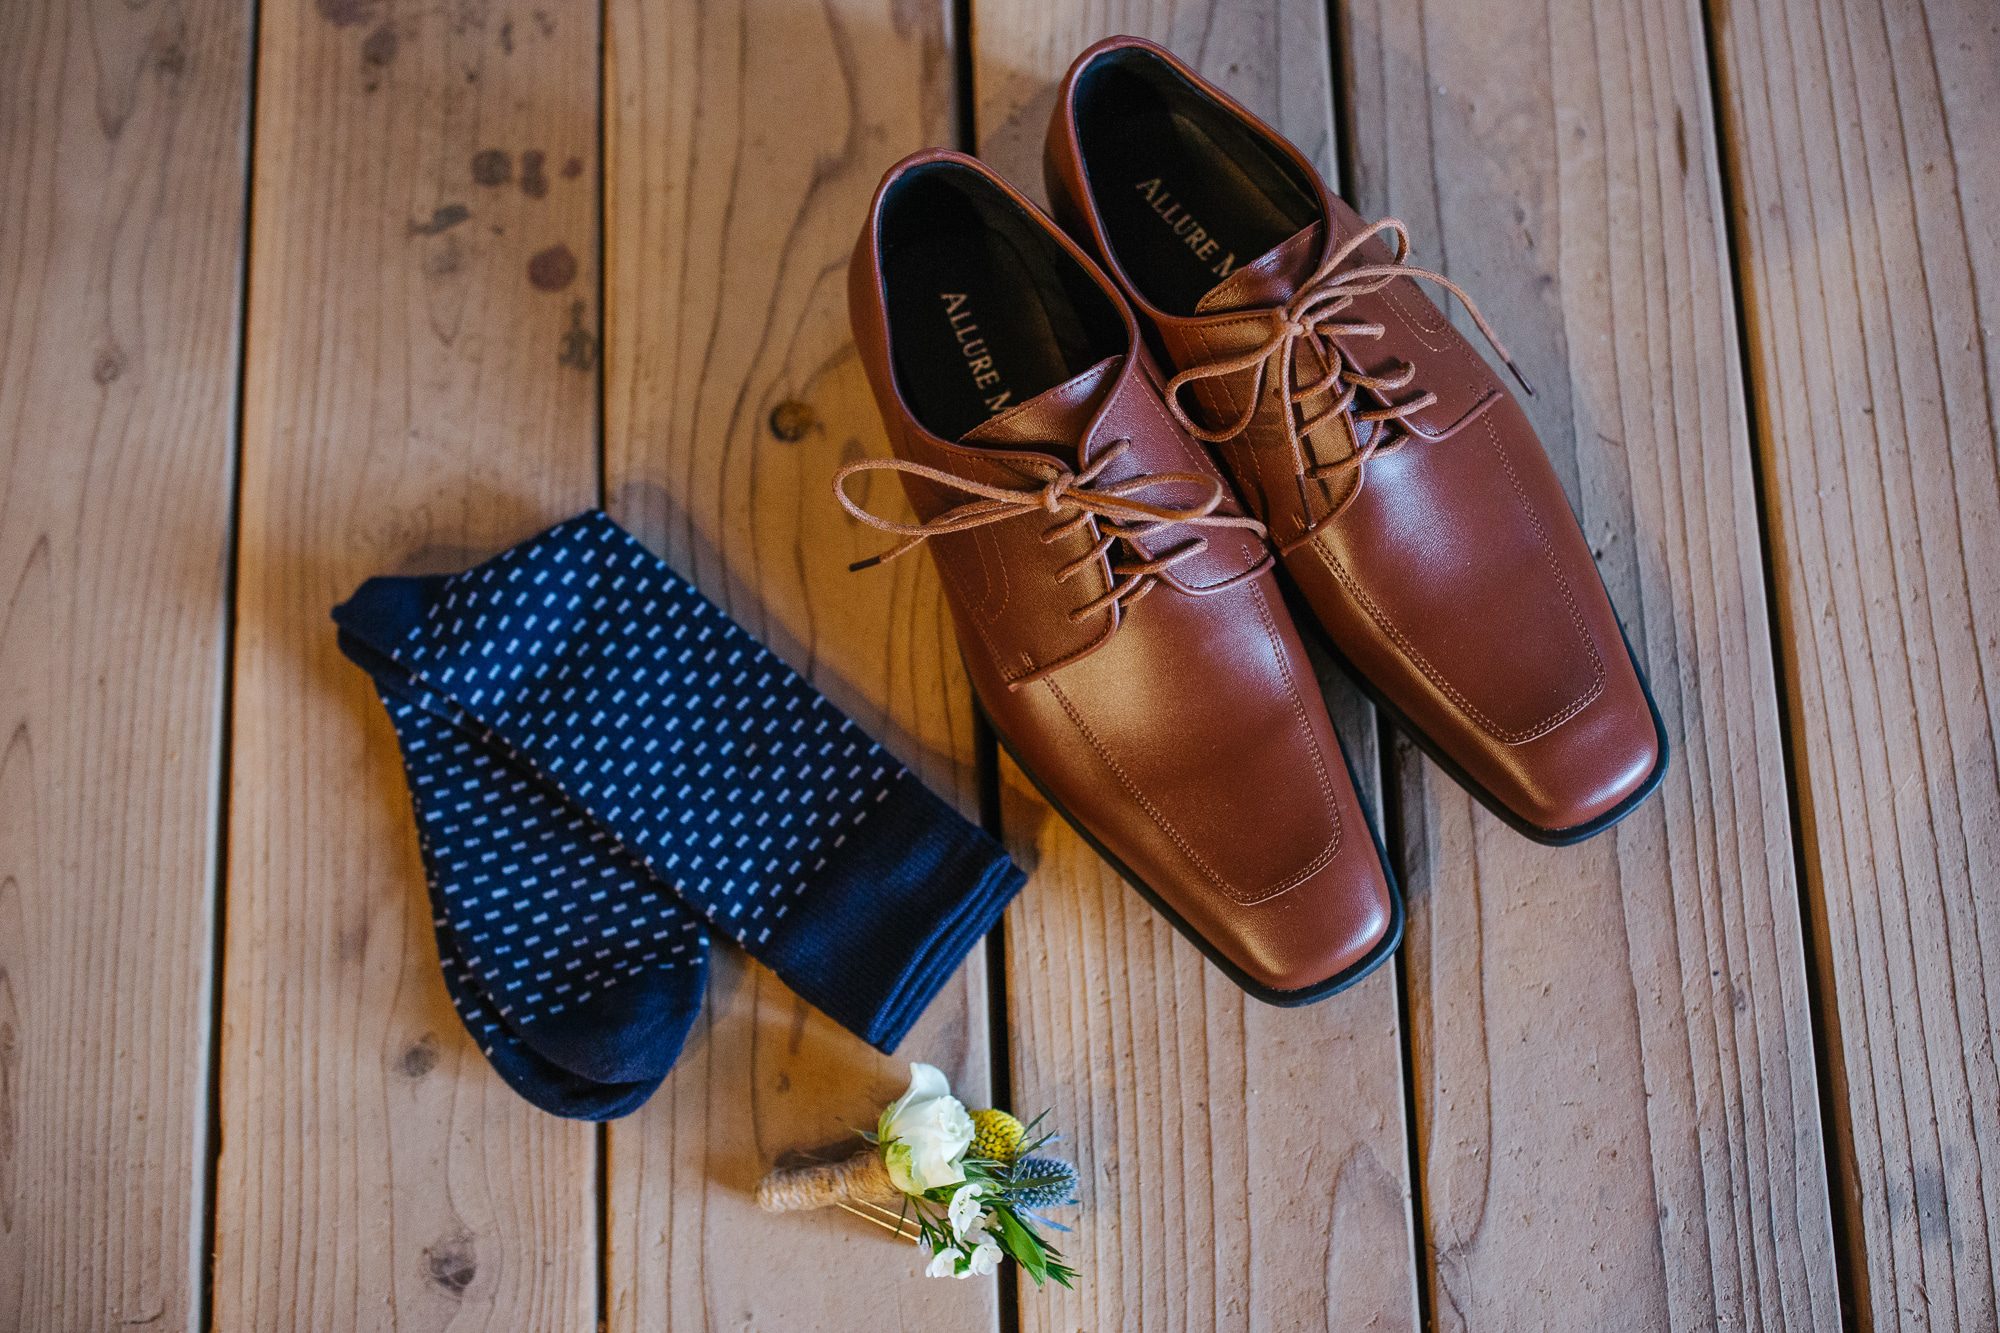 groom shoes, groom details, blue socks, groom detail shot